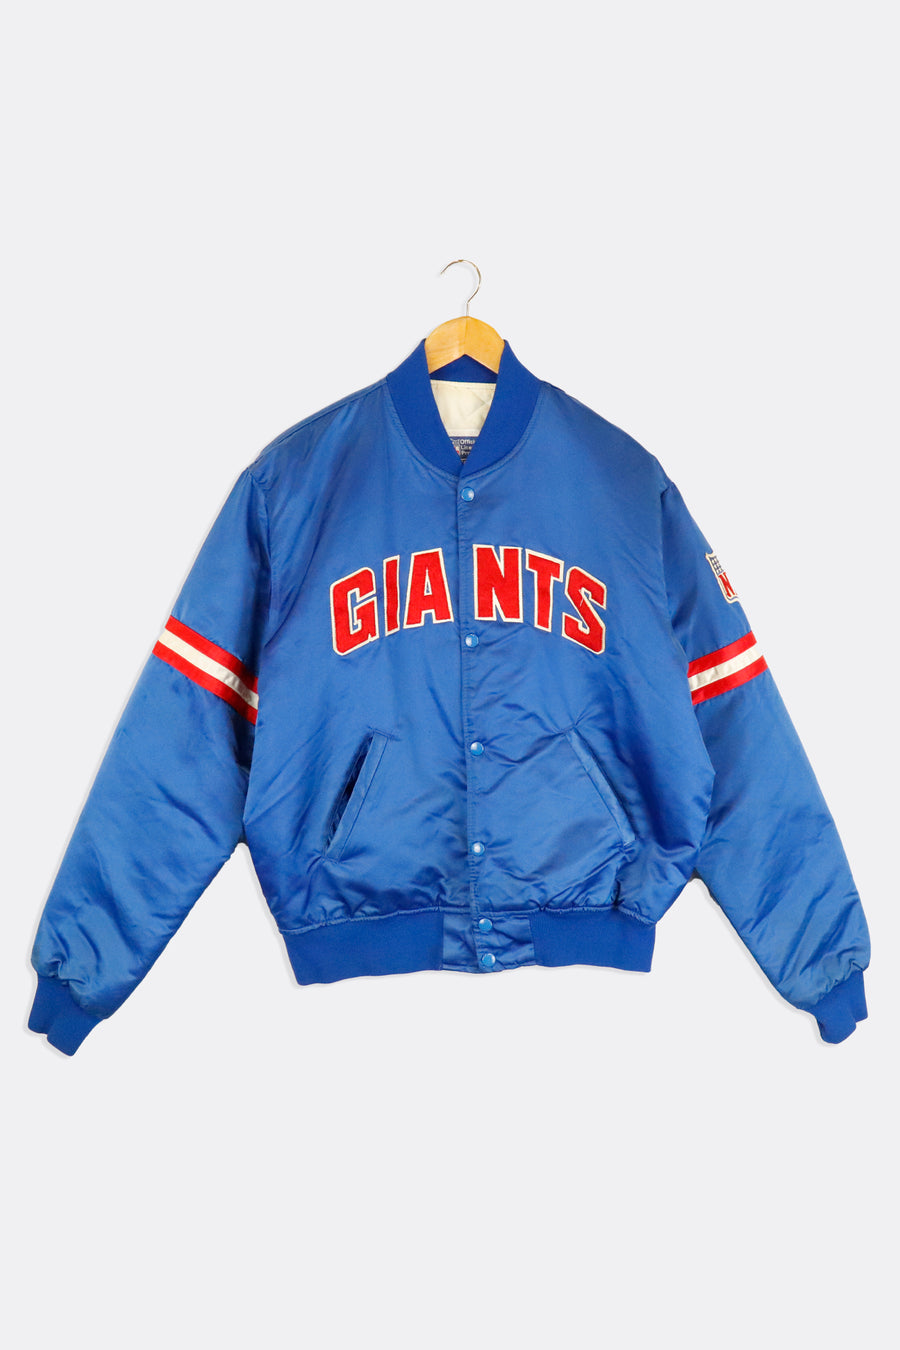 Vintage NFL Giants Team Bomber Button Up Jacket Sz L